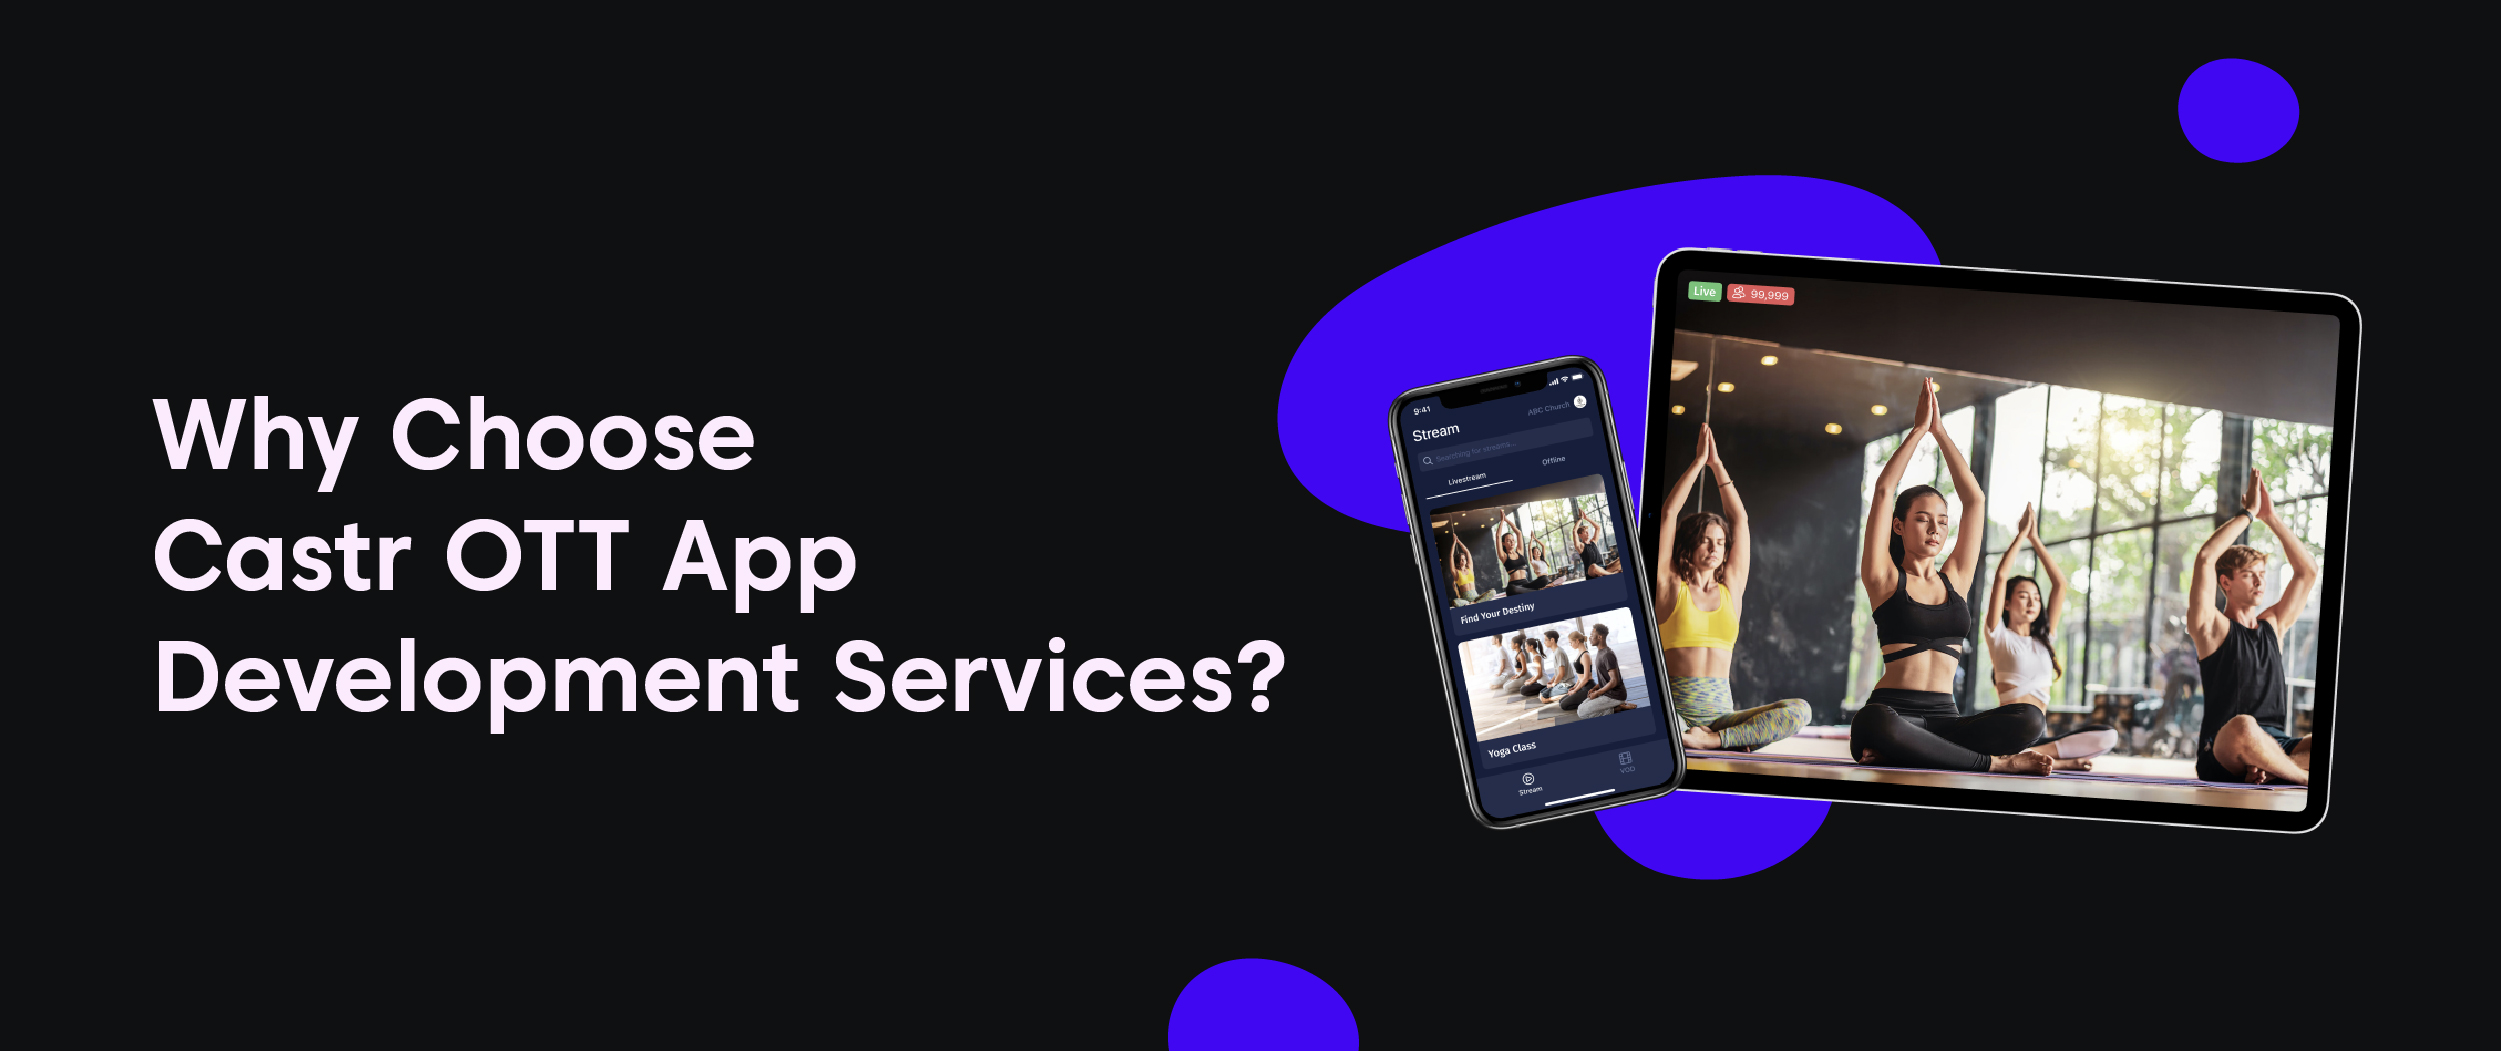 Why Choose Castr OTT App Development Services?